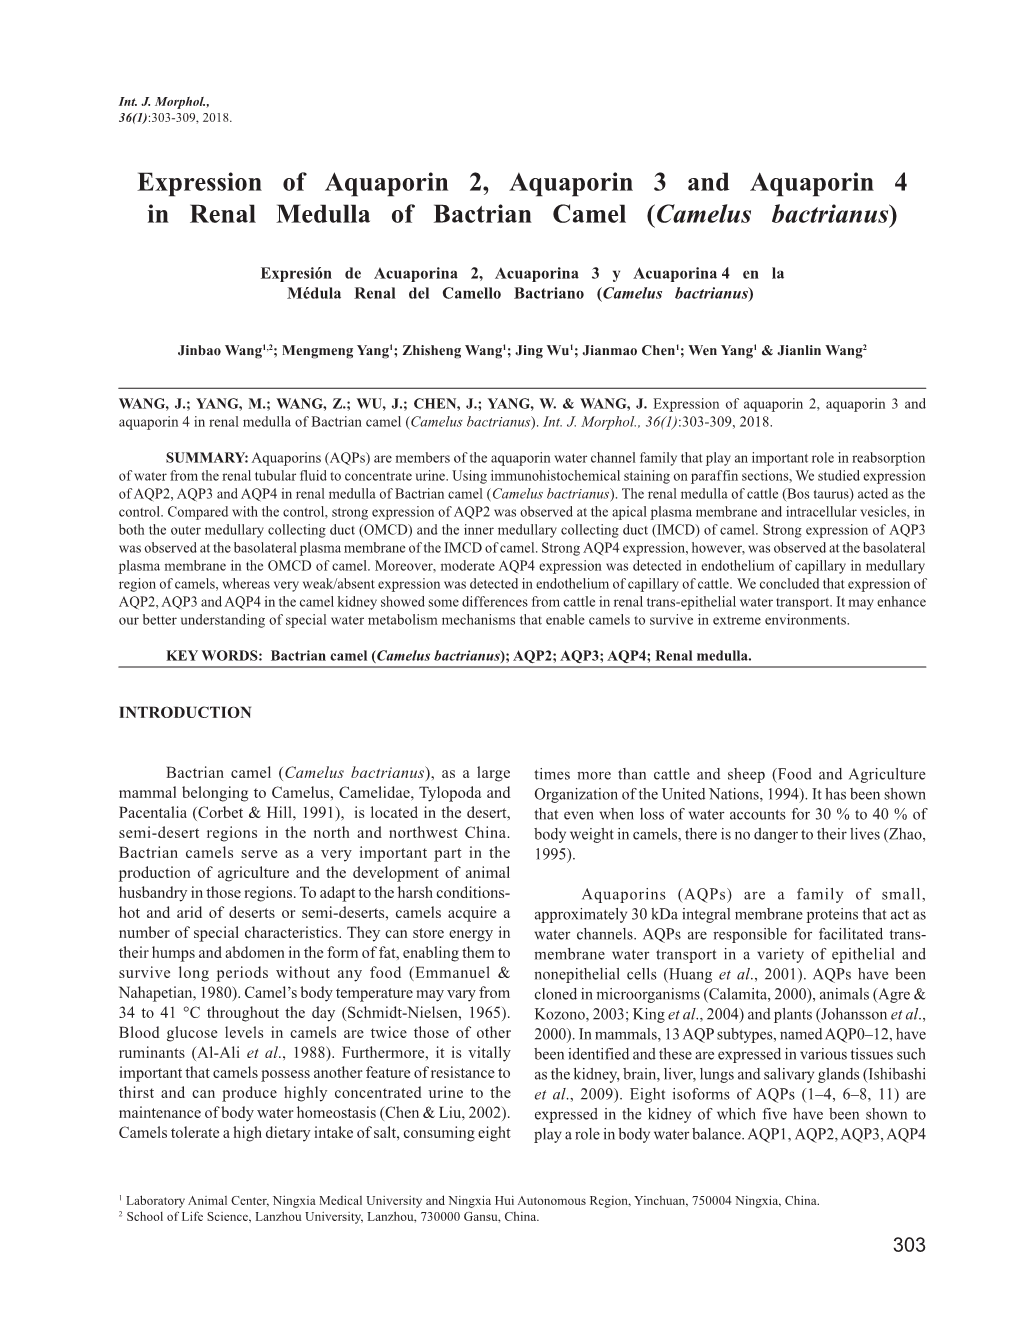 Expression of Aquaporin 2, Aquaporin 3 and Aquaporin 4 in Renal Medulla of Bactrian Camel (Camelus Bactrianus)